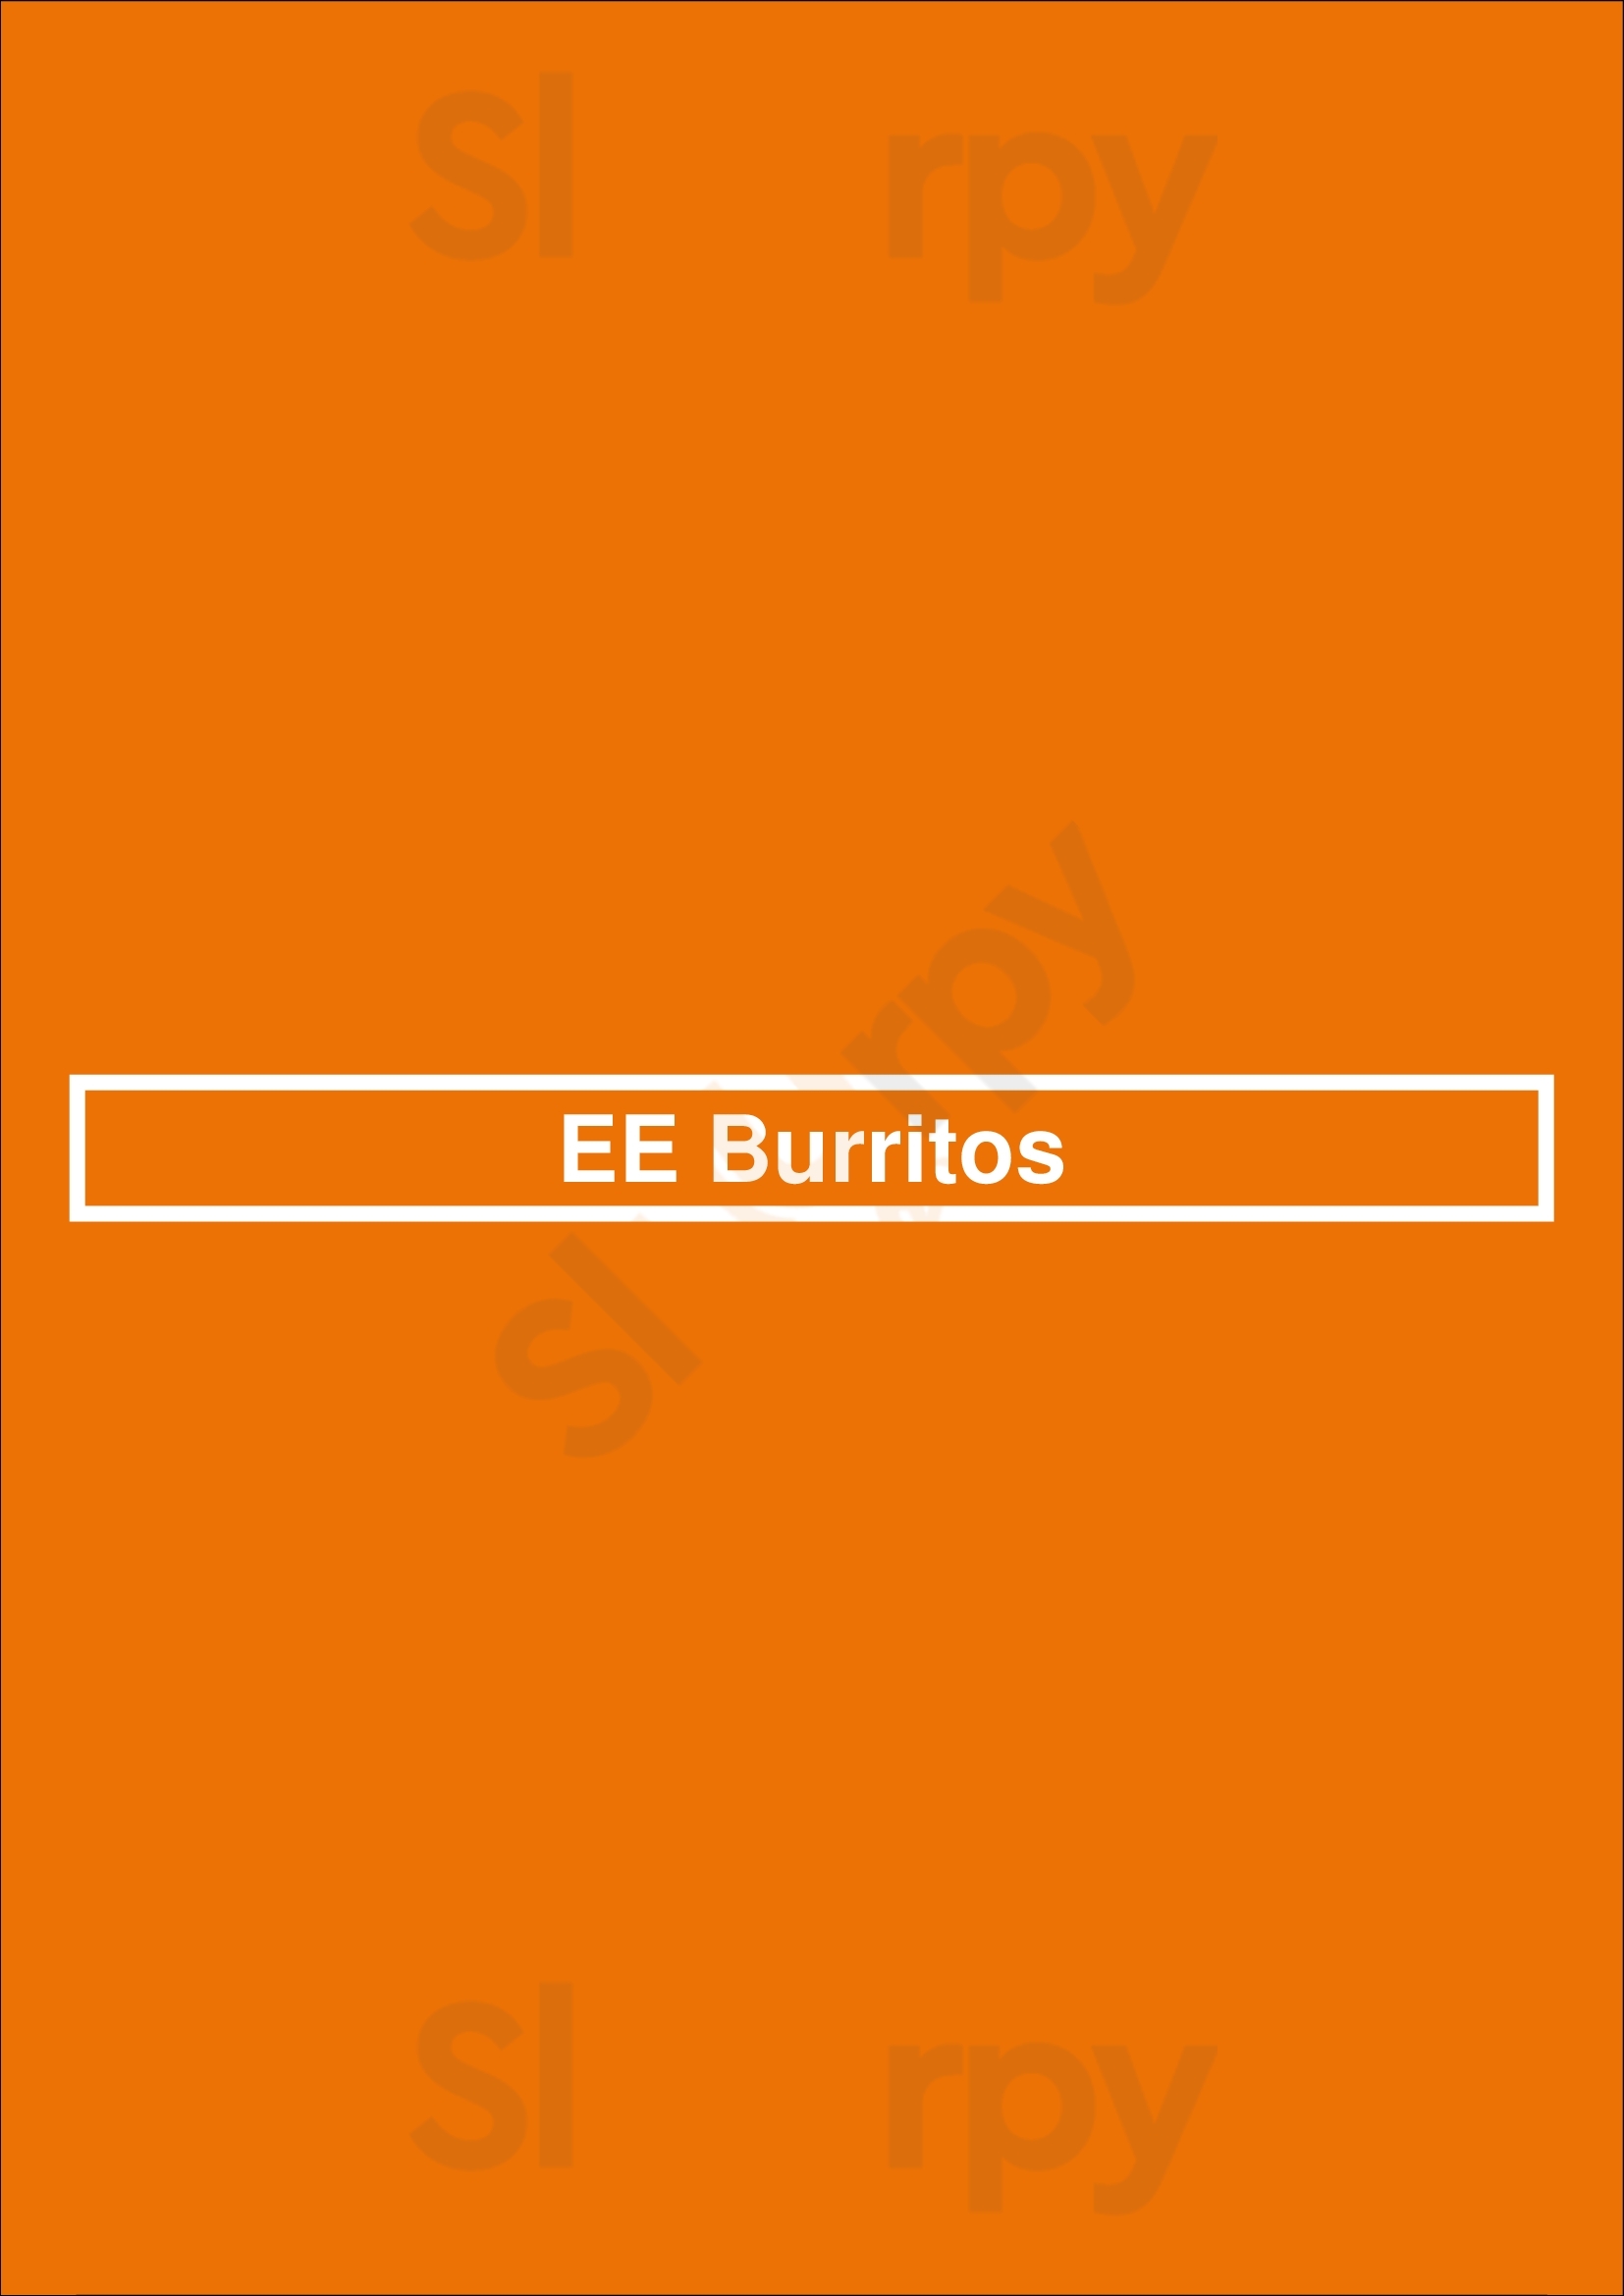 Ee Burritos Saskatoon Menu - 1